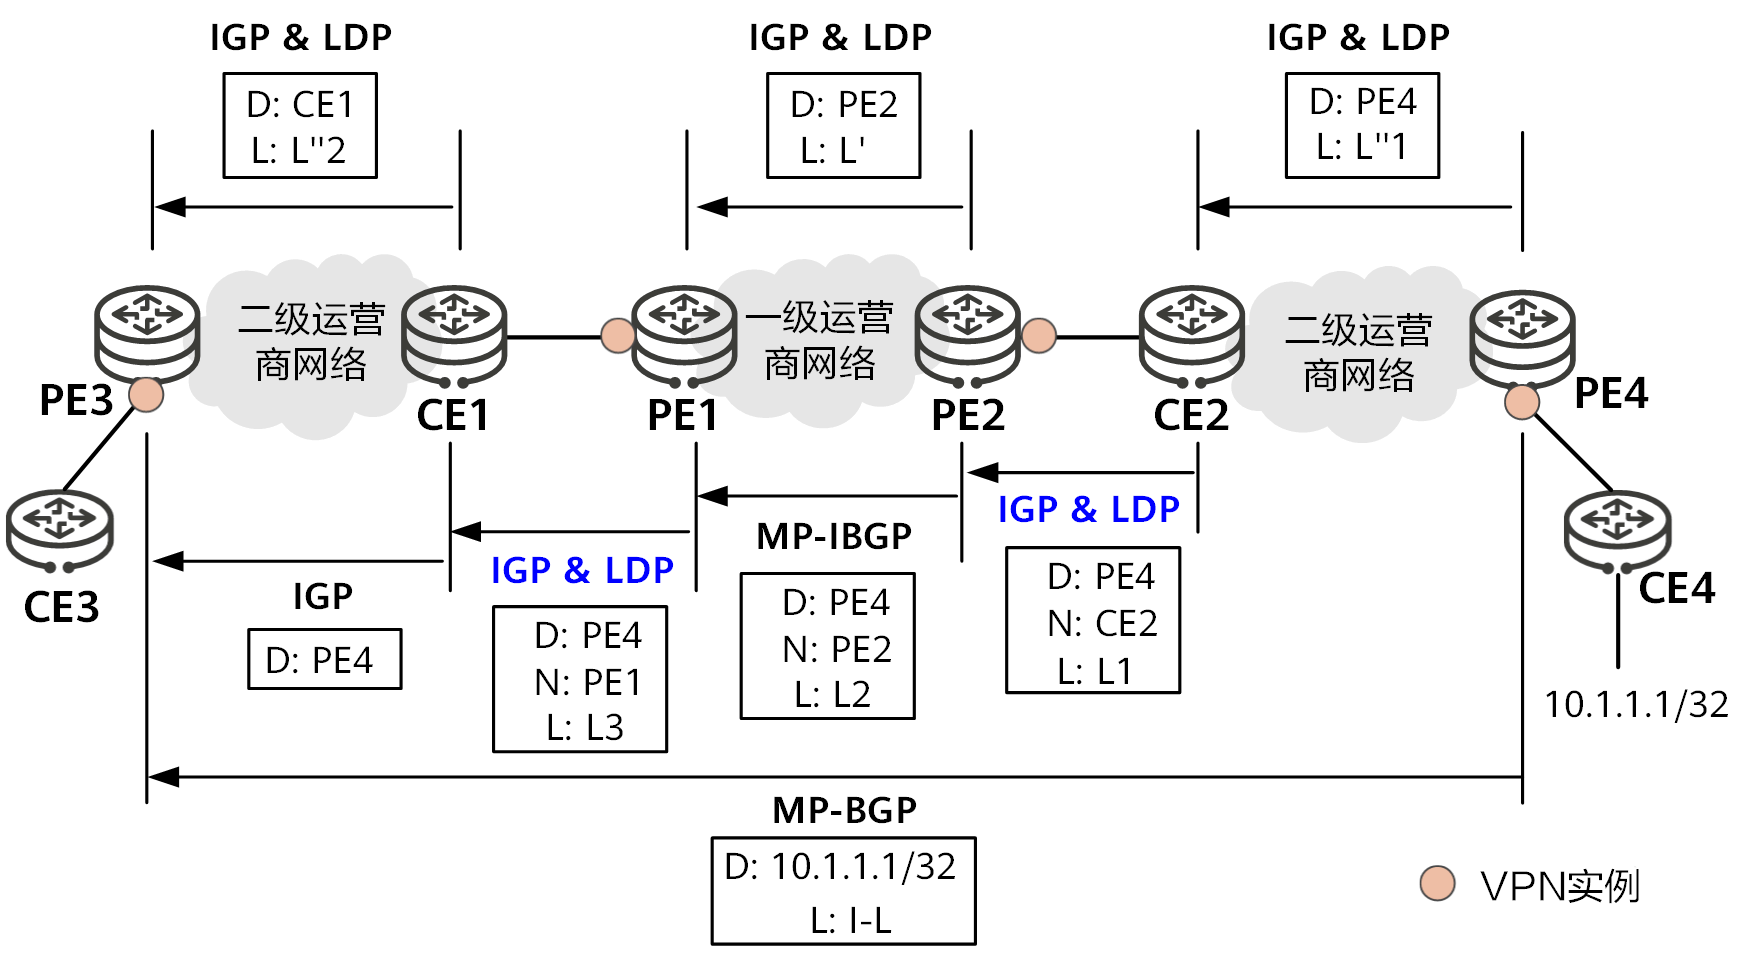 MPLS VPN中的CSC组网方案